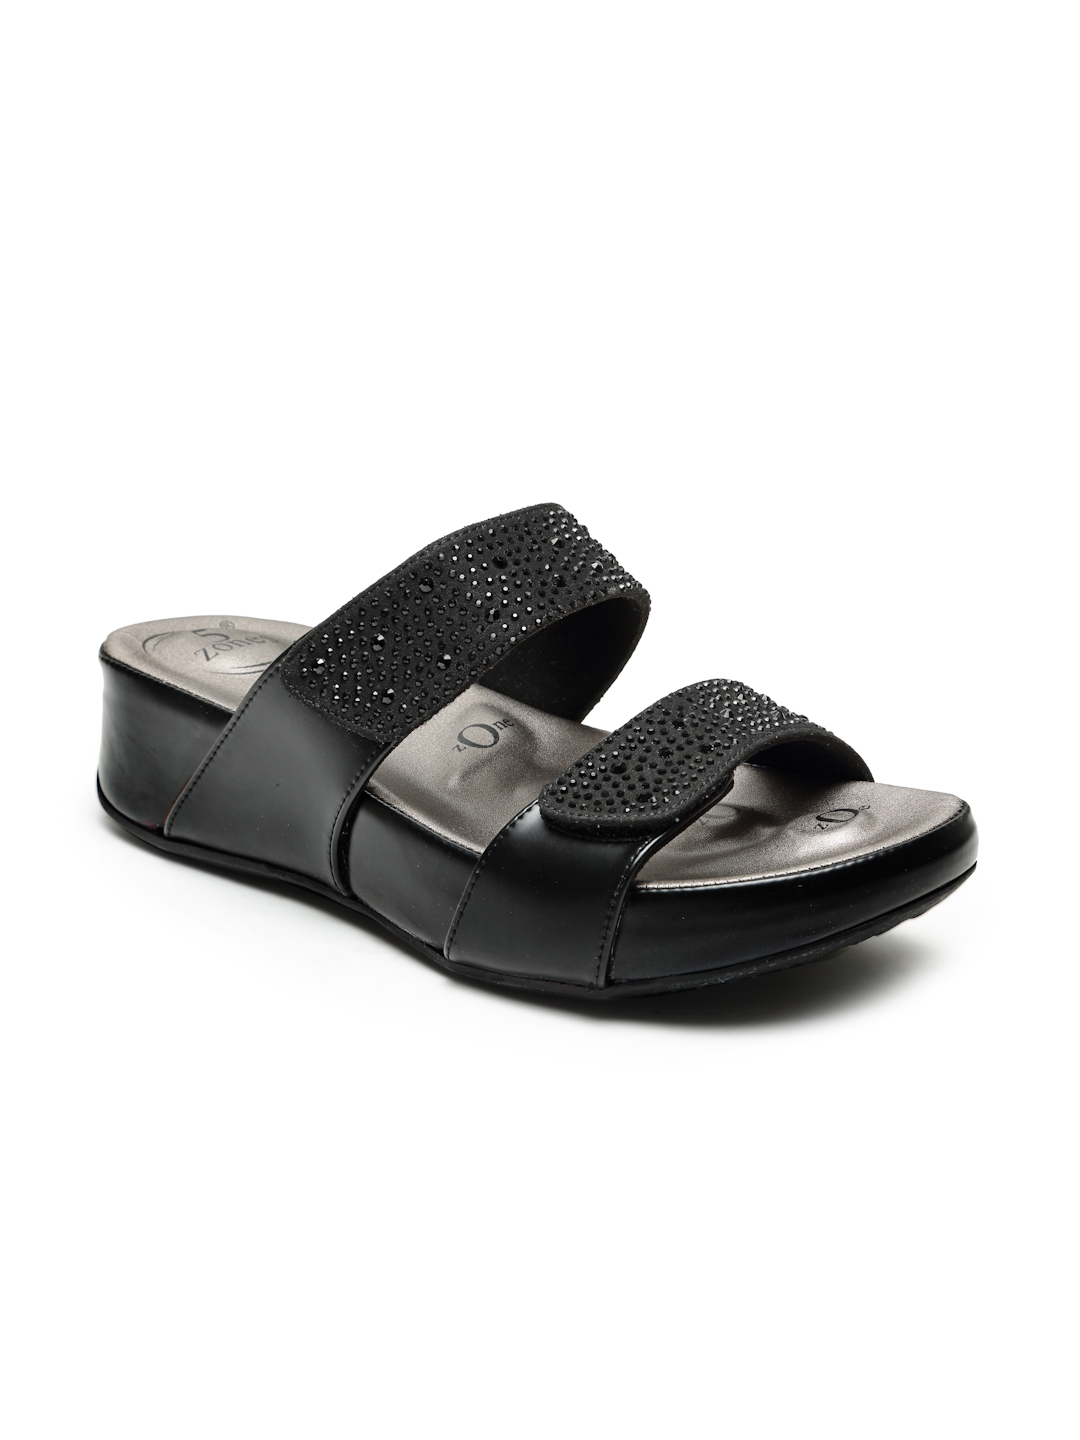 Buy Von Wellx Germany Comfort Women's Black Casual Sandals Paula Online in Ludhiana